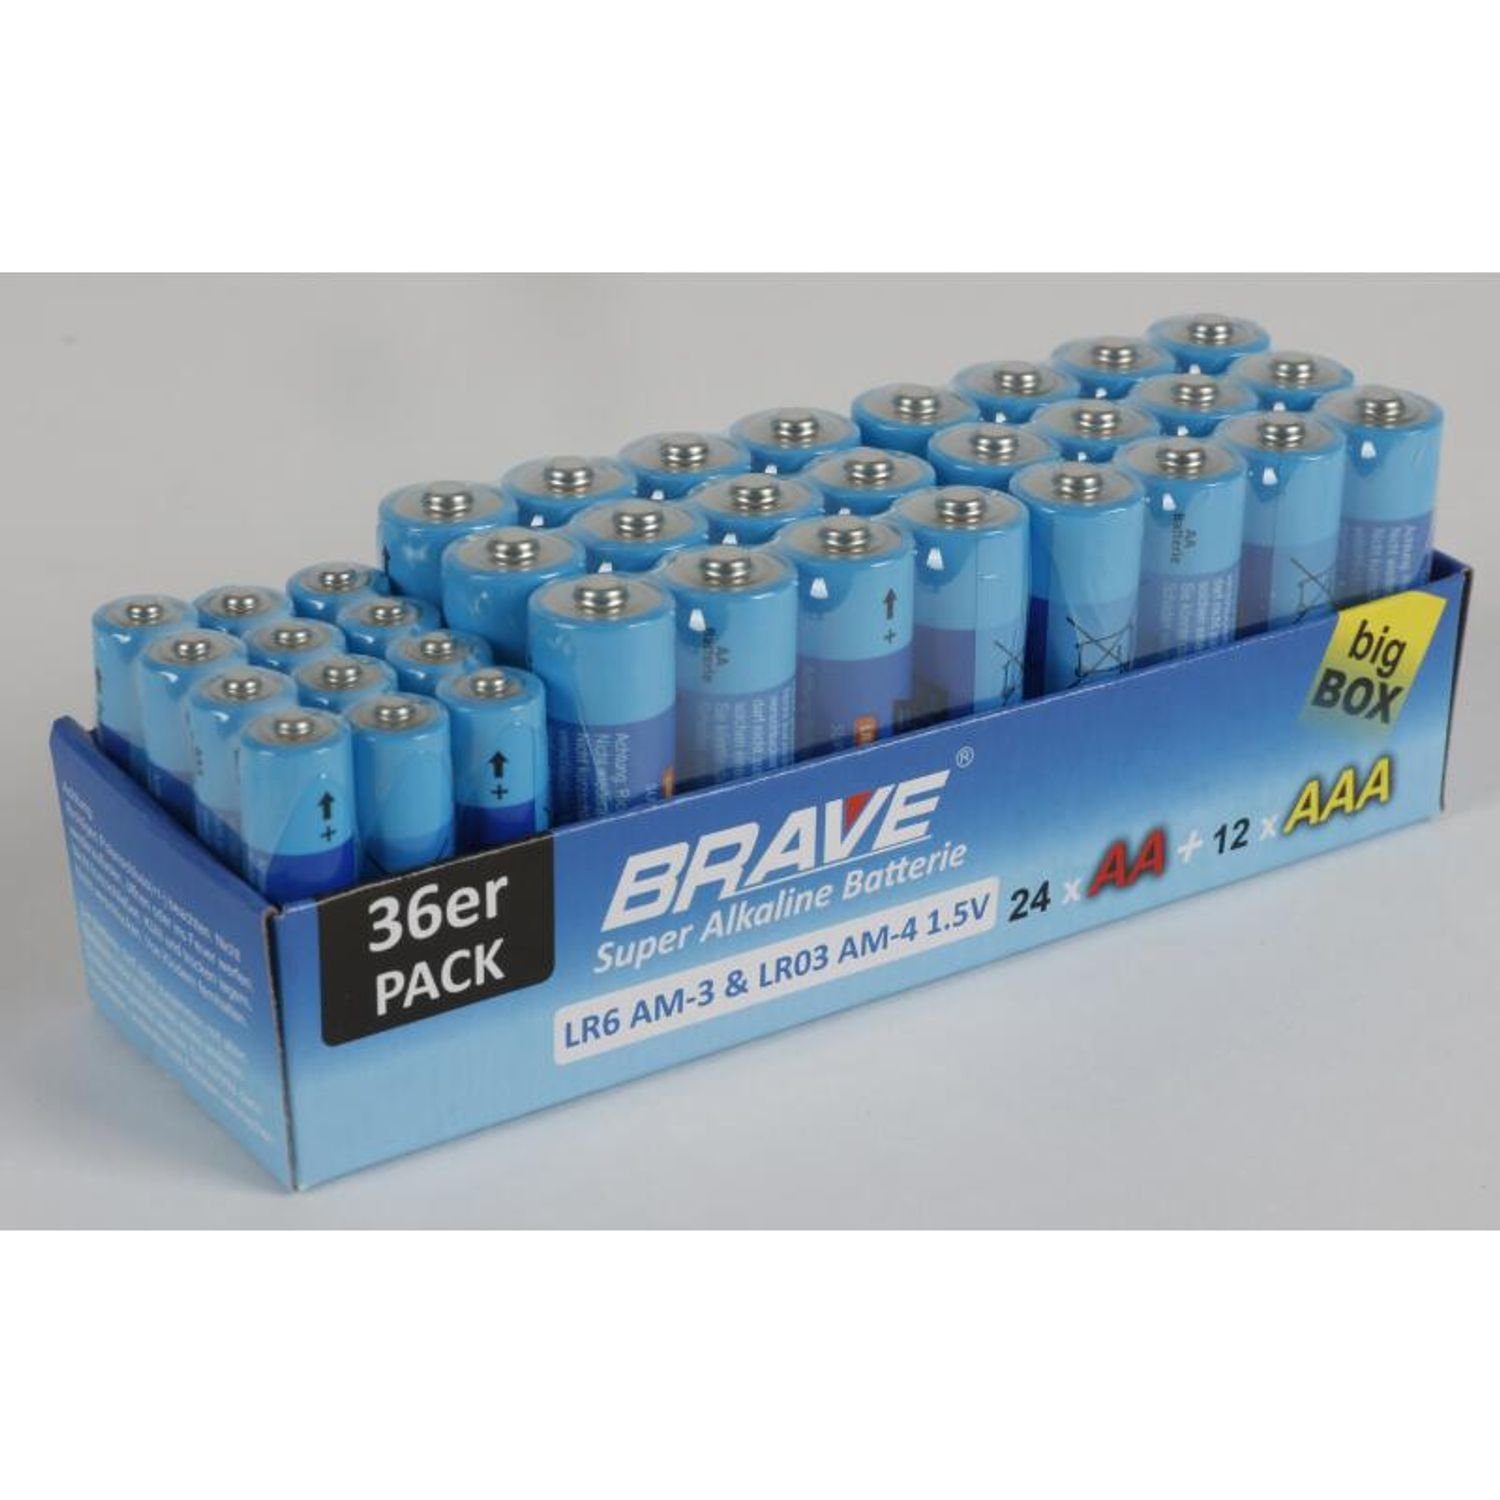 BURI 24x 36er-Packung Brave Alkaline Batterien AA & AAA Großpackung Batterie, (864 St)